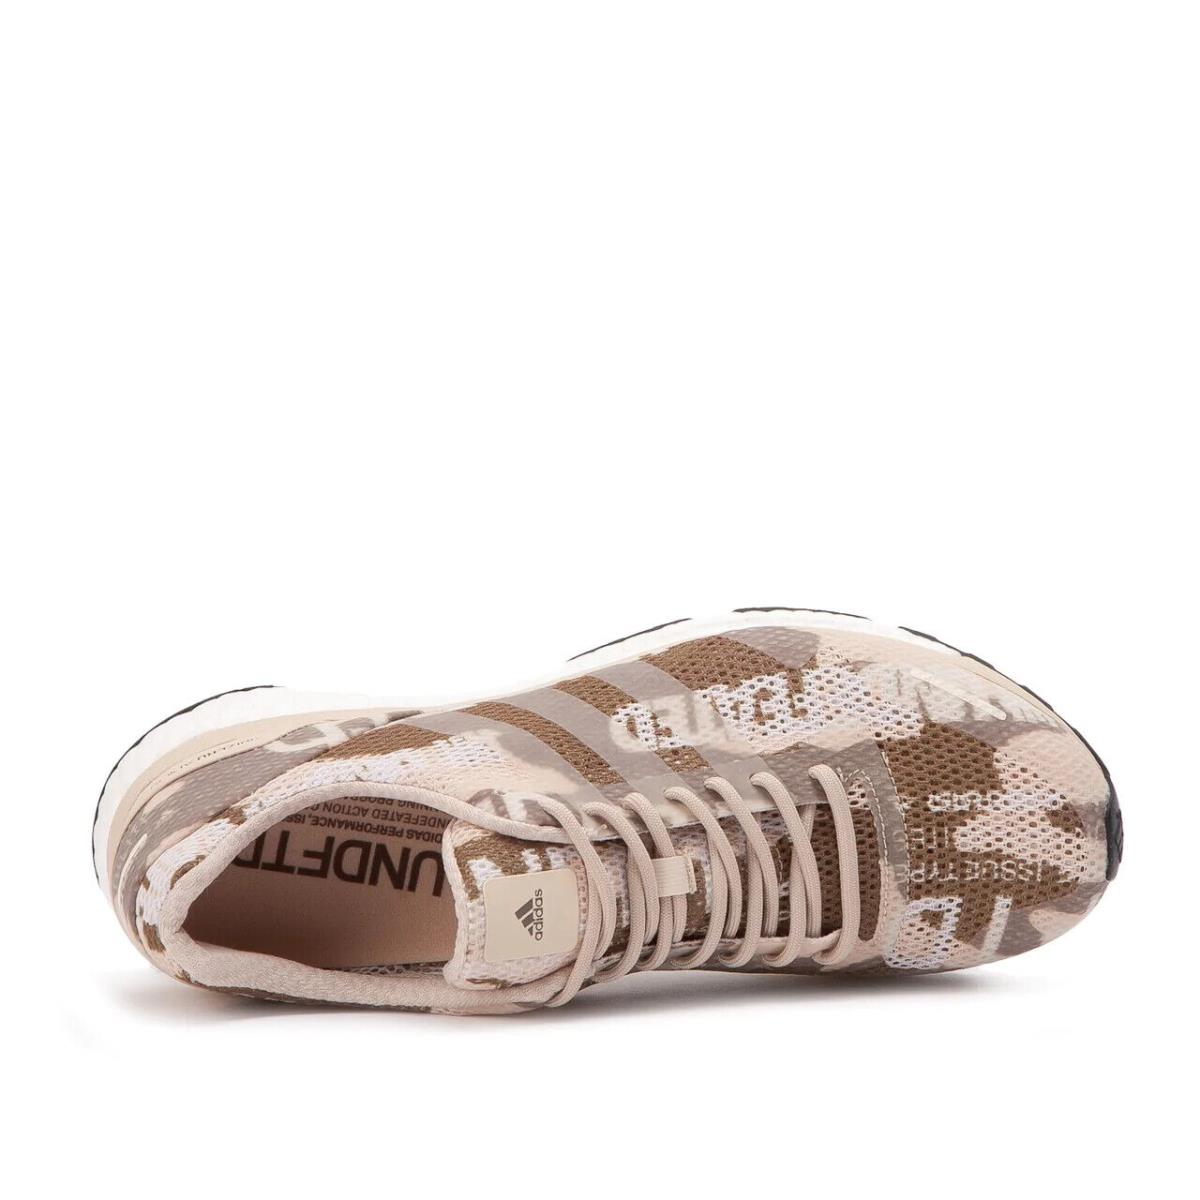 Adidas shoes Adizero Adios UNDEFEATED - Desert Camo (Brown) , Camo/Tan/White Manufacturer 3